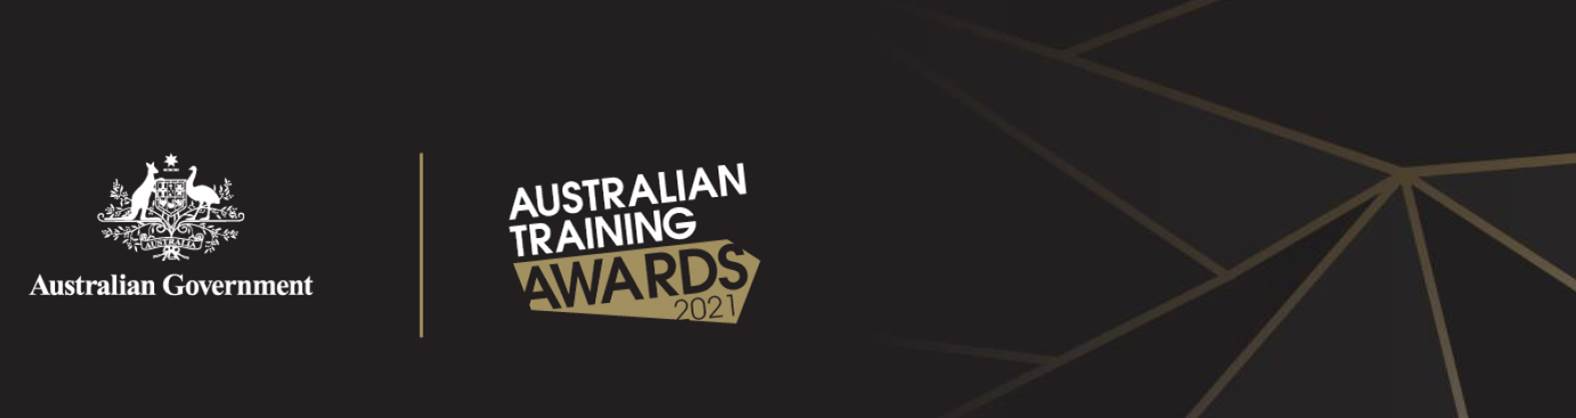 Australian Training Awards logo